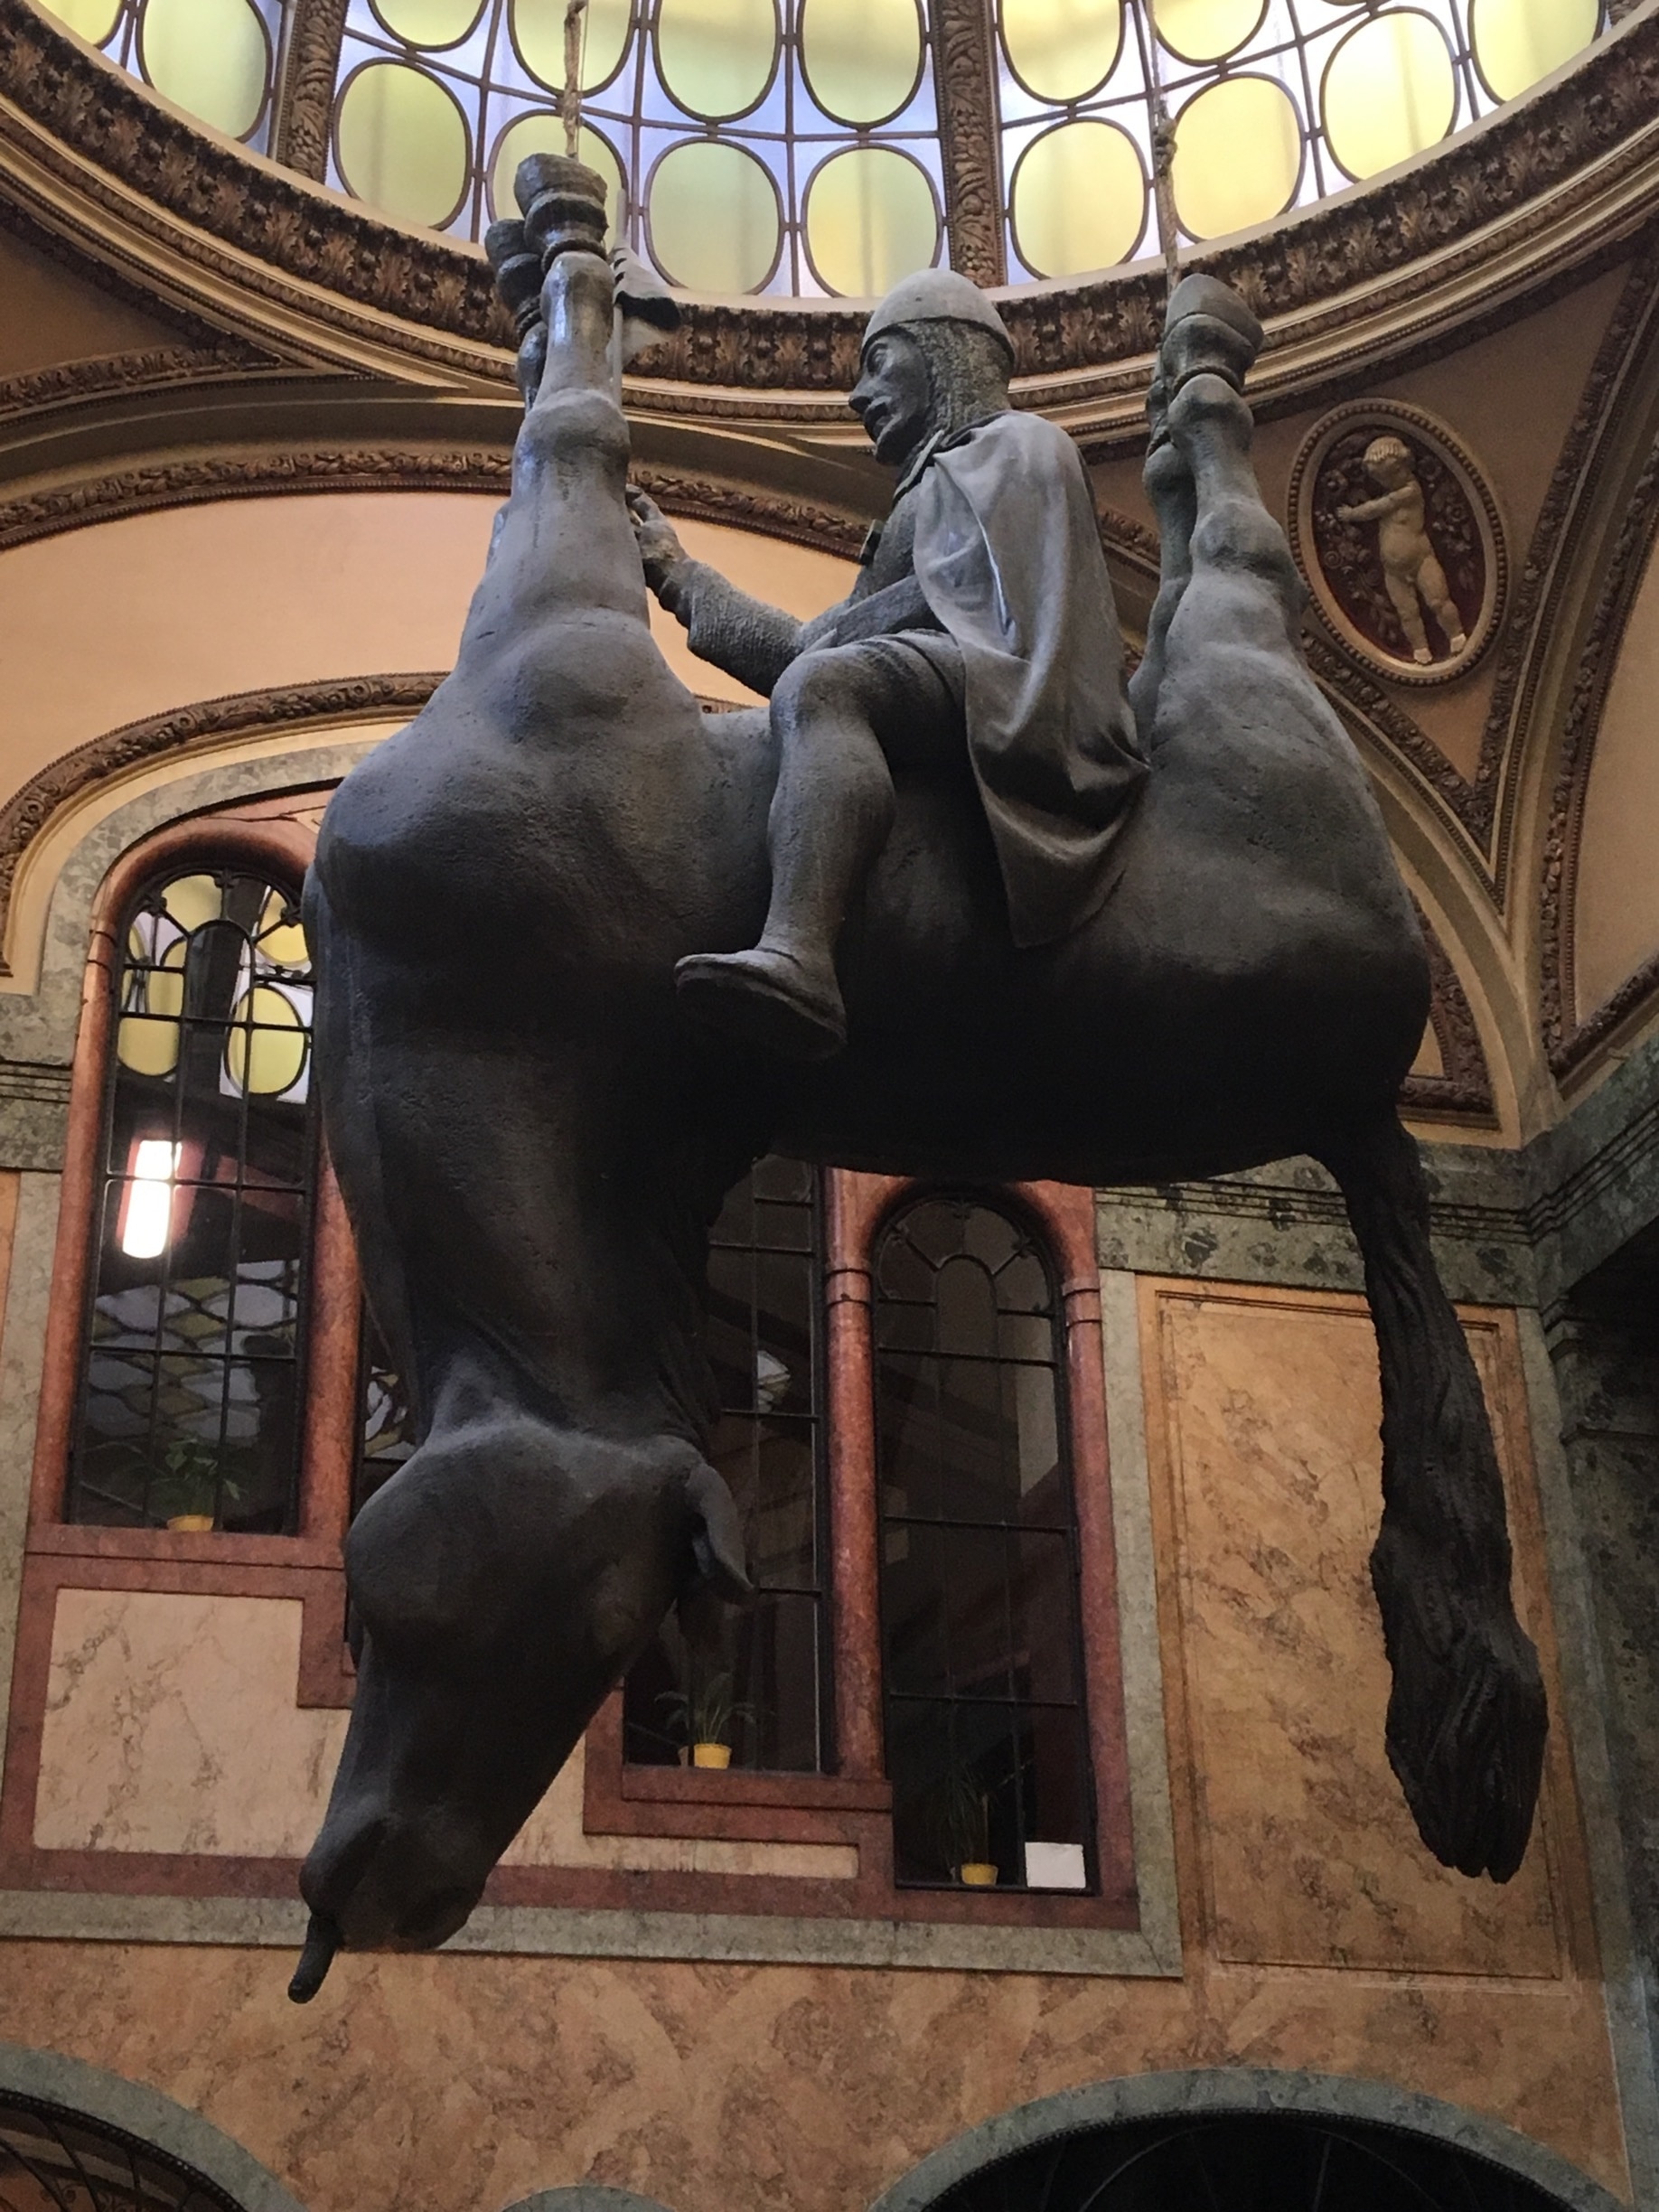 Unusual David Cerny sculpture inside the Lucerne shopping arcade. King Wenceslas astride an upside down horse.